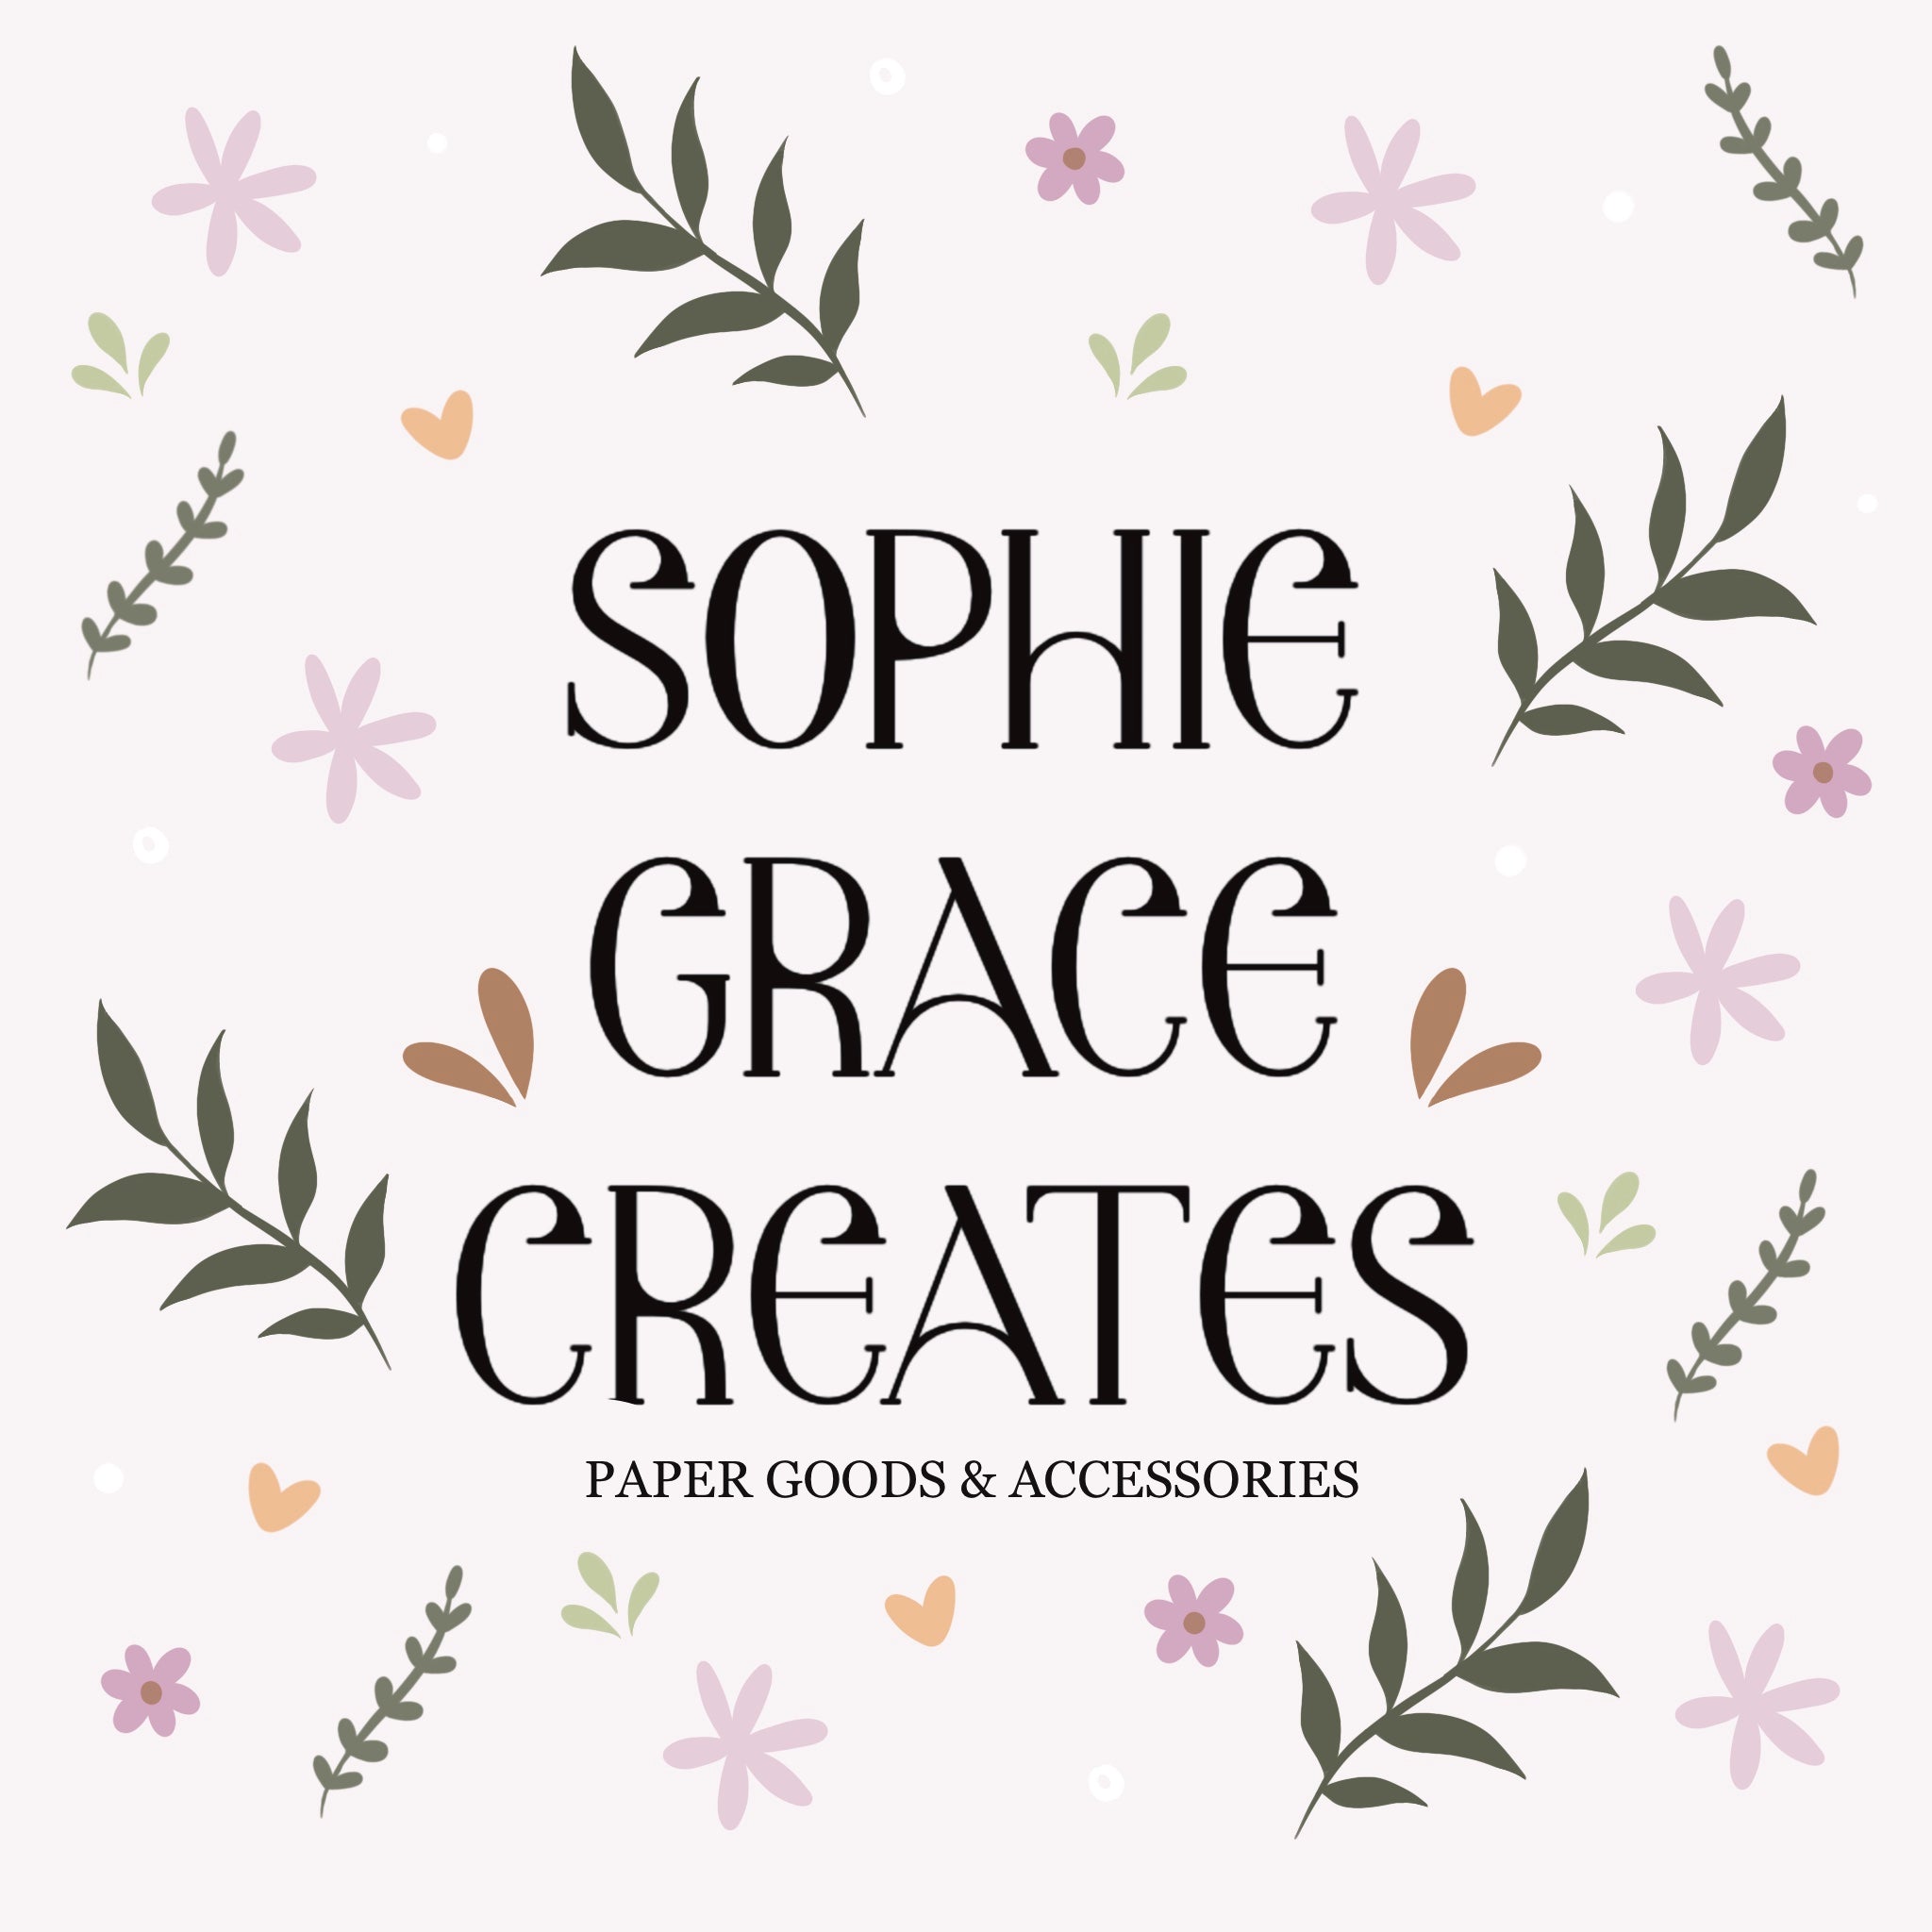 Sophie Grace Creates E-Gift Card